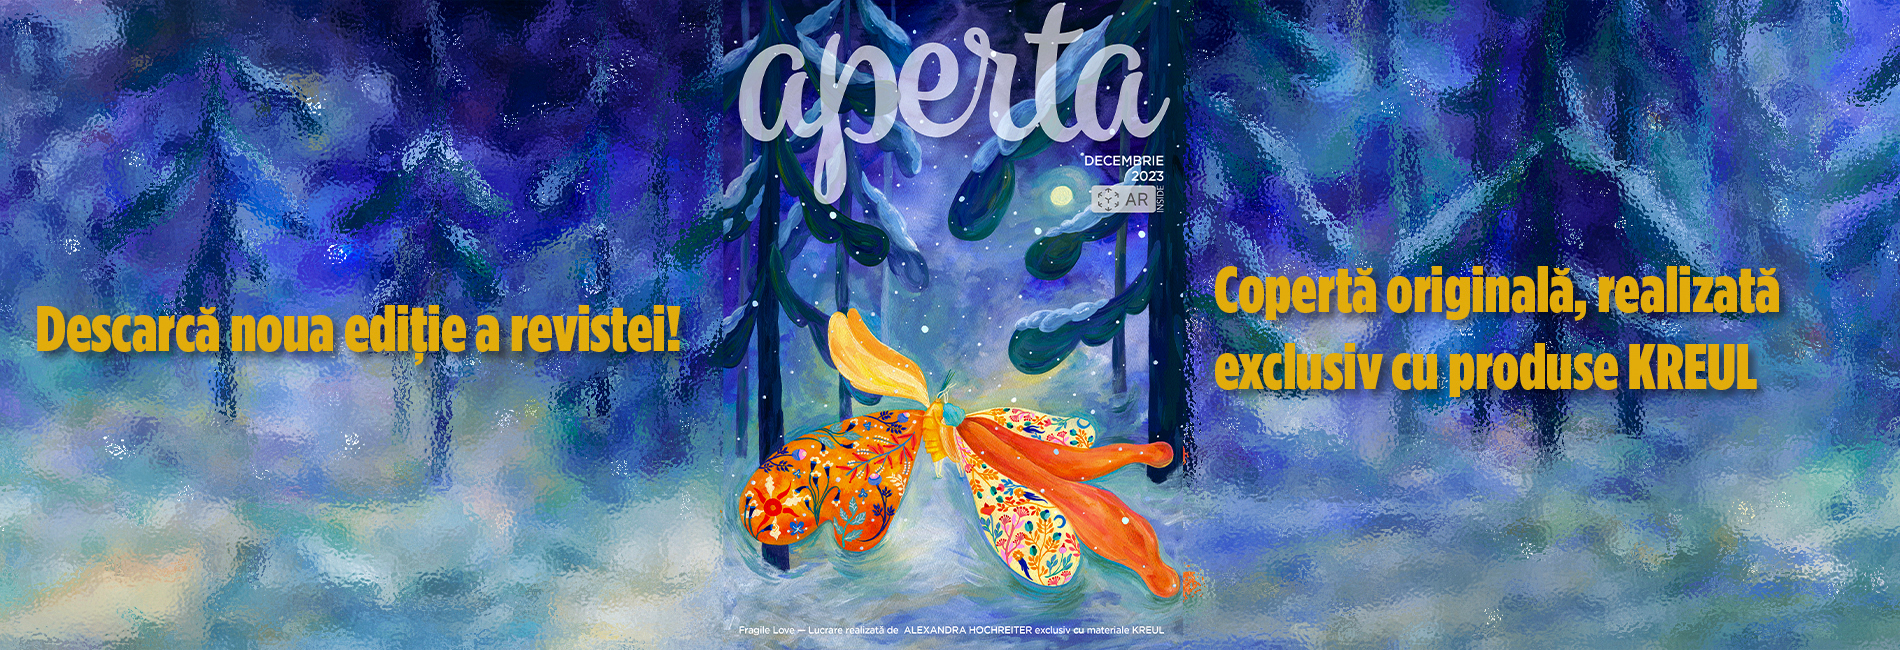 Magazin Aperta 12-2023